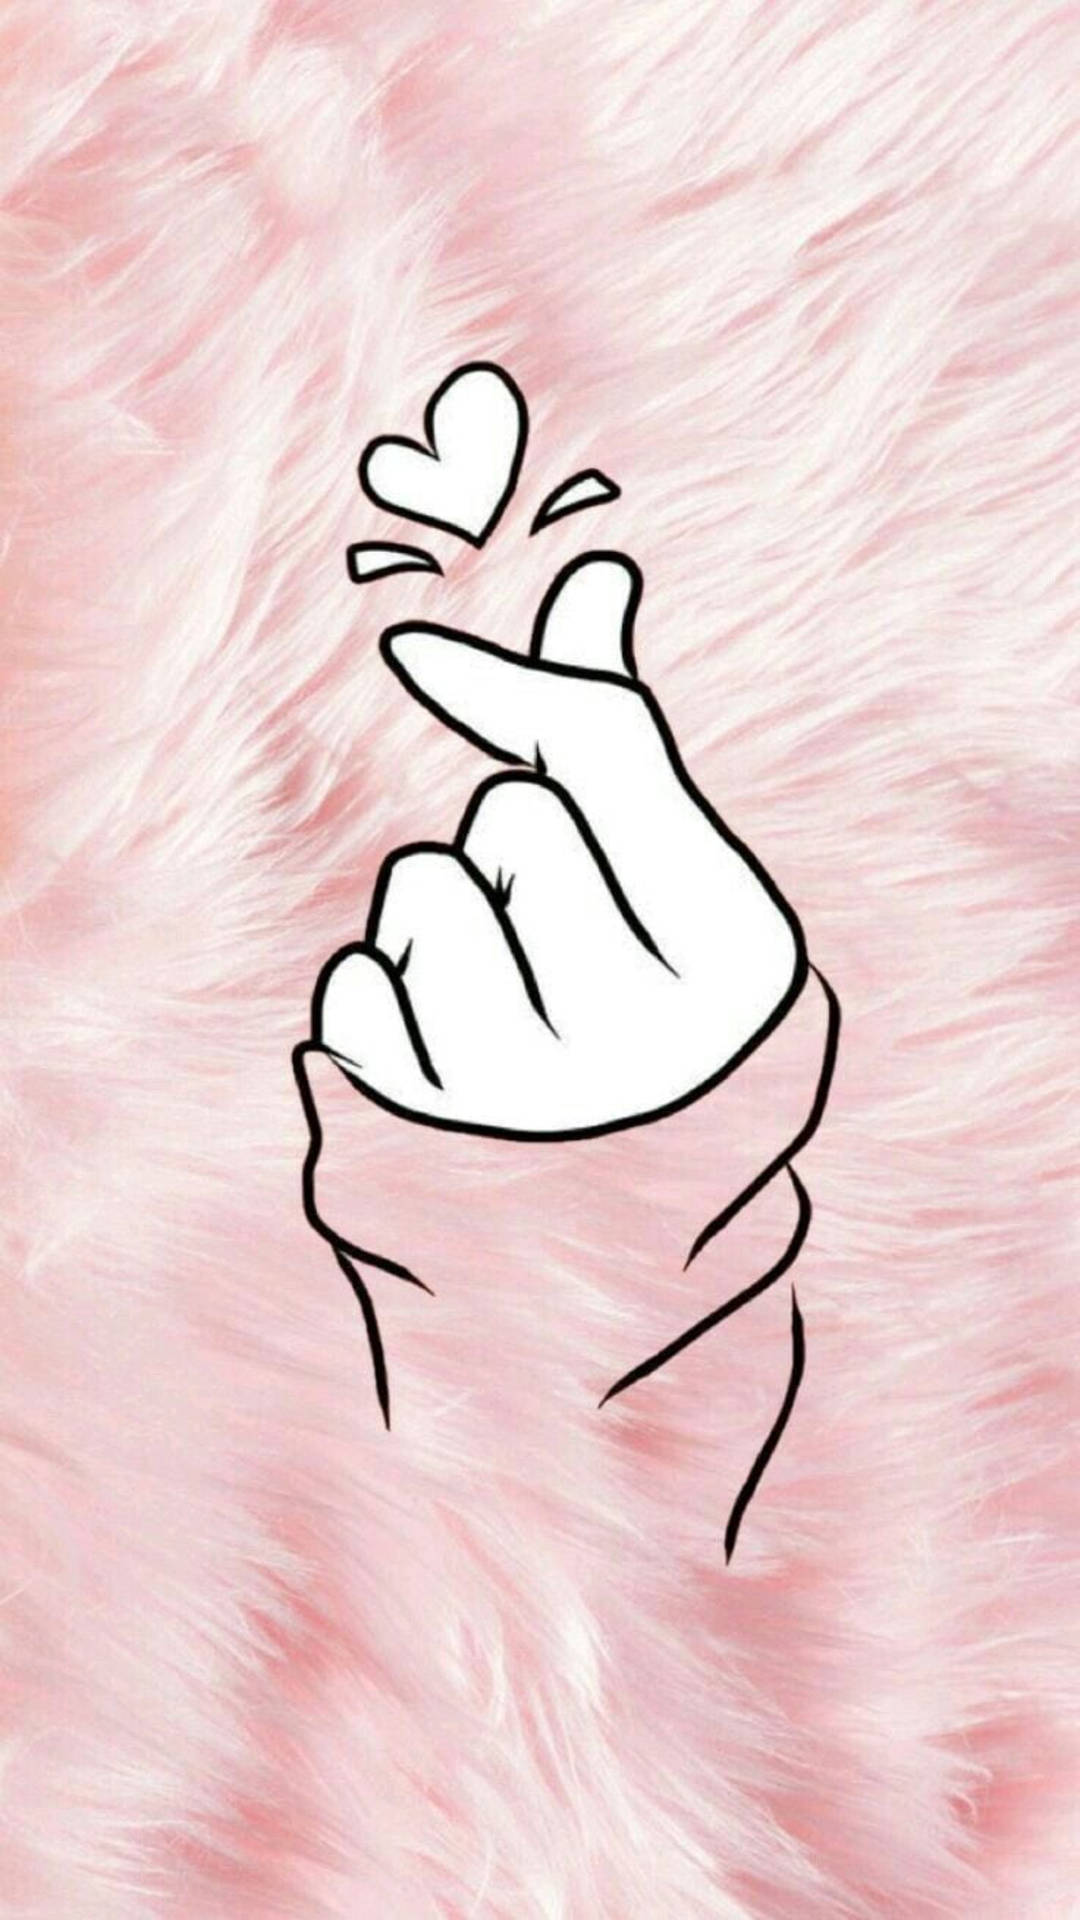 Saranghae Finger Heart On Pink Rug Background